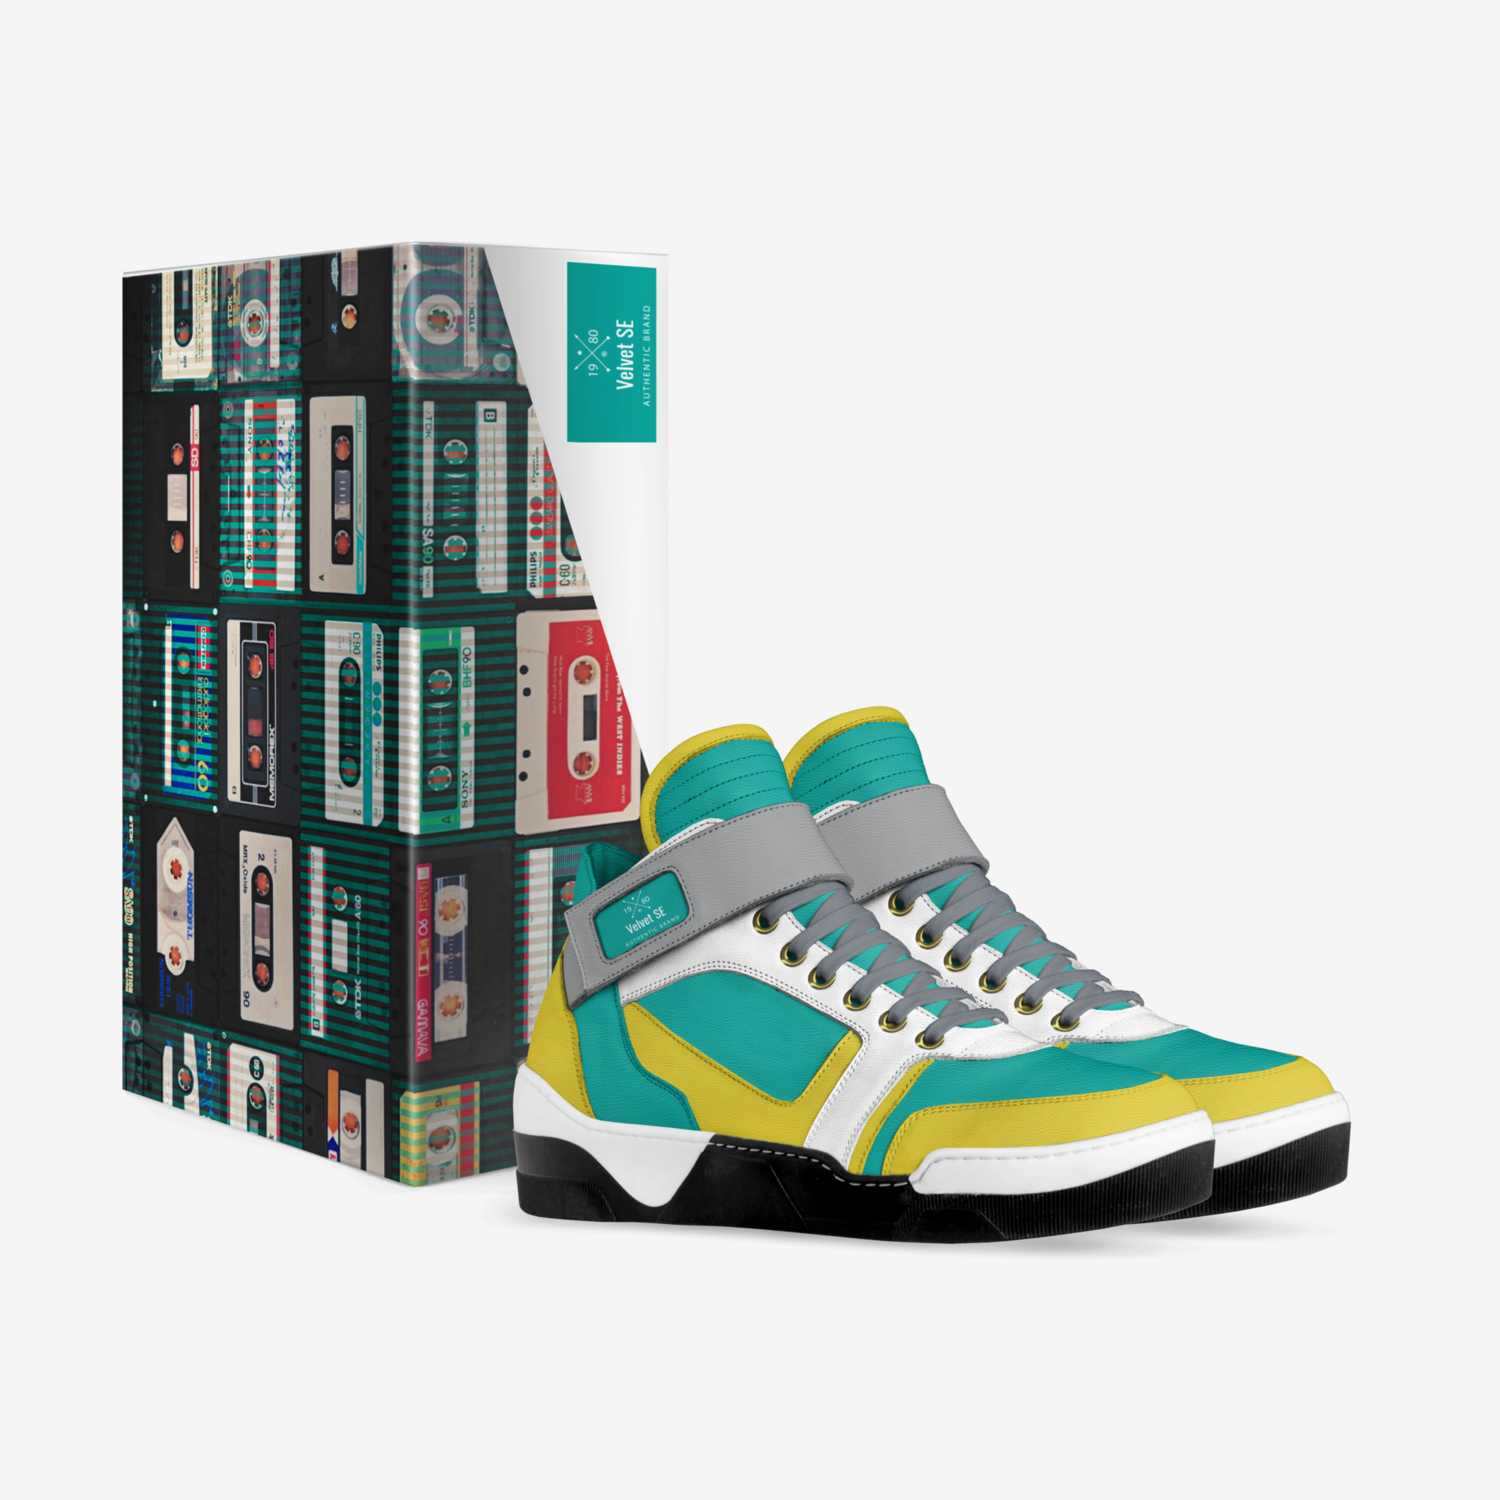 Velvet SE custom made in Italy shoes by Shantae Esannason | Box view